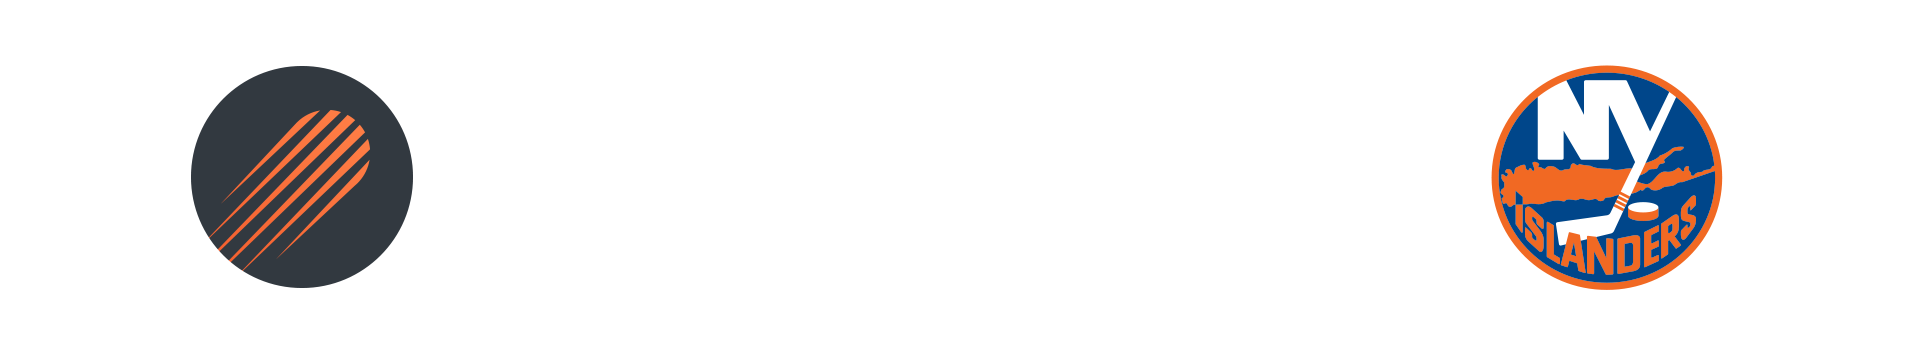 NYI - Logos - Powered by ORANGE COMET